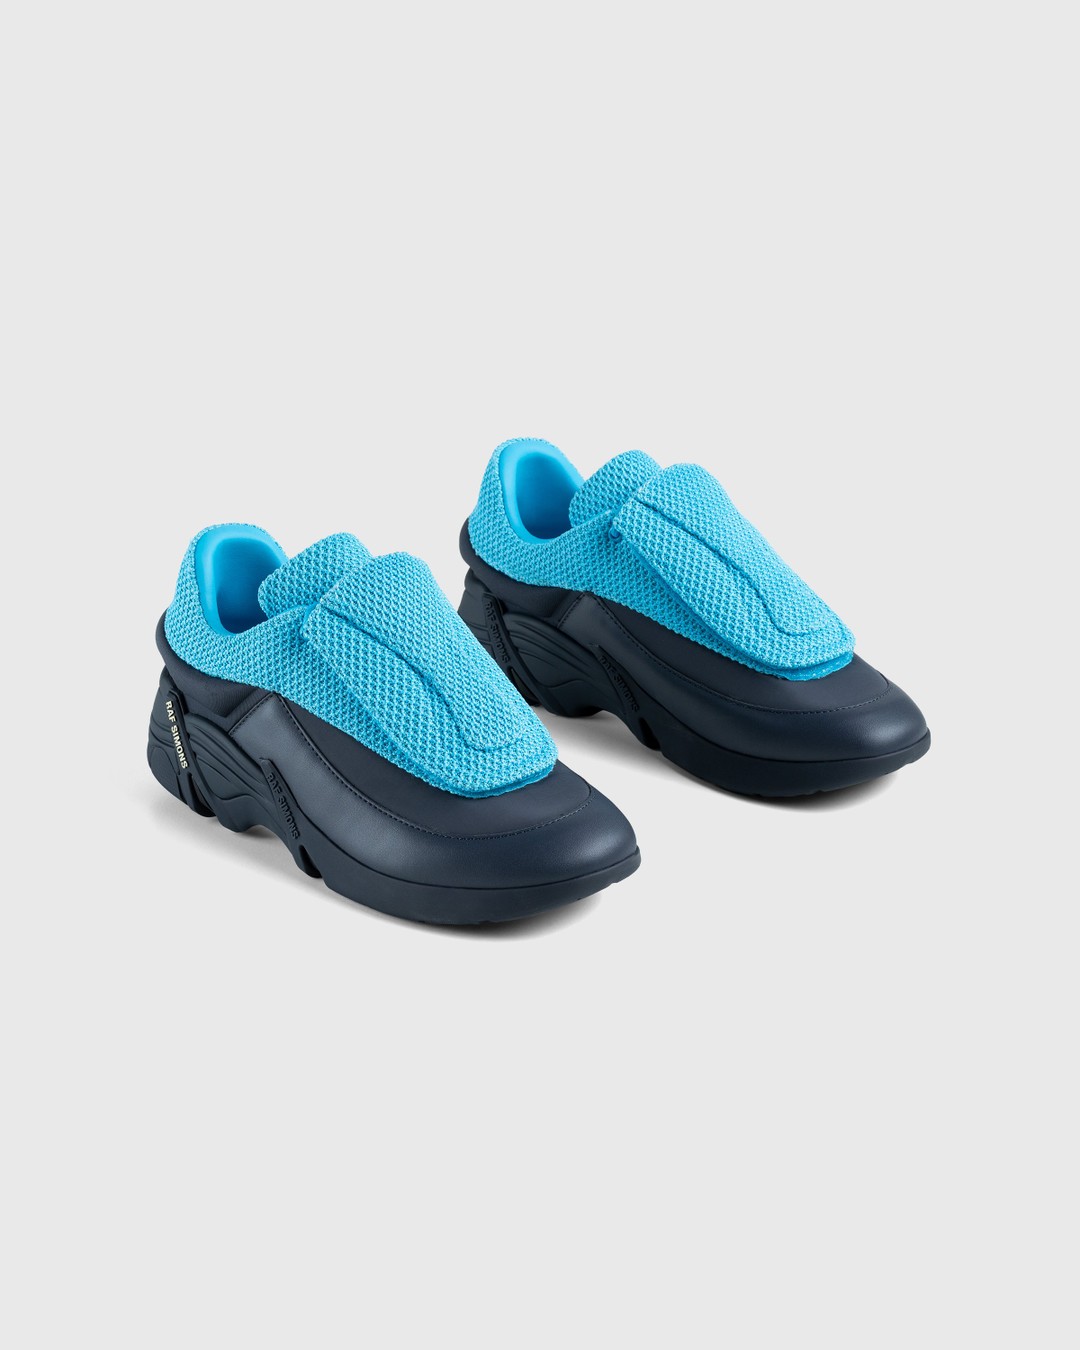 Raf Simons – Antei Aqua - Sneakers - Blue - Image 3